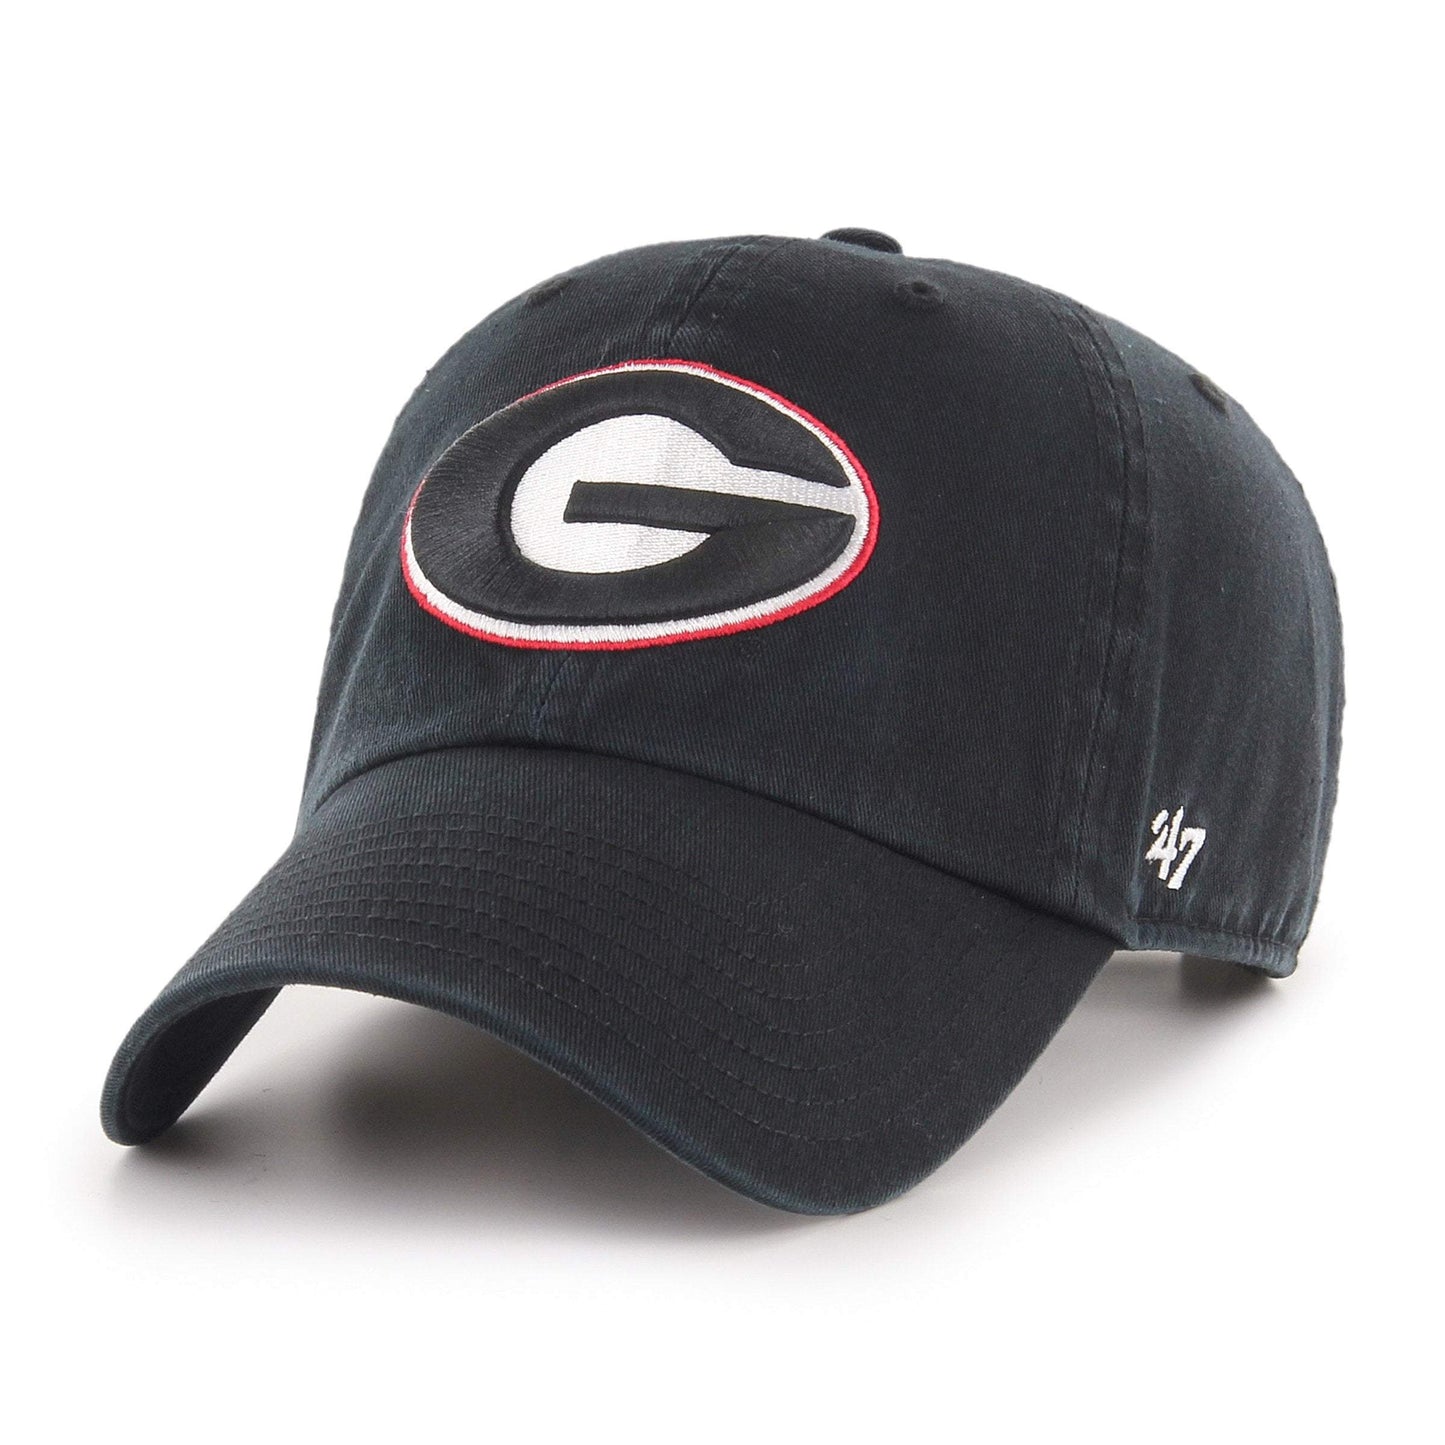 Georgia Bulldogs Black Flagship Cap